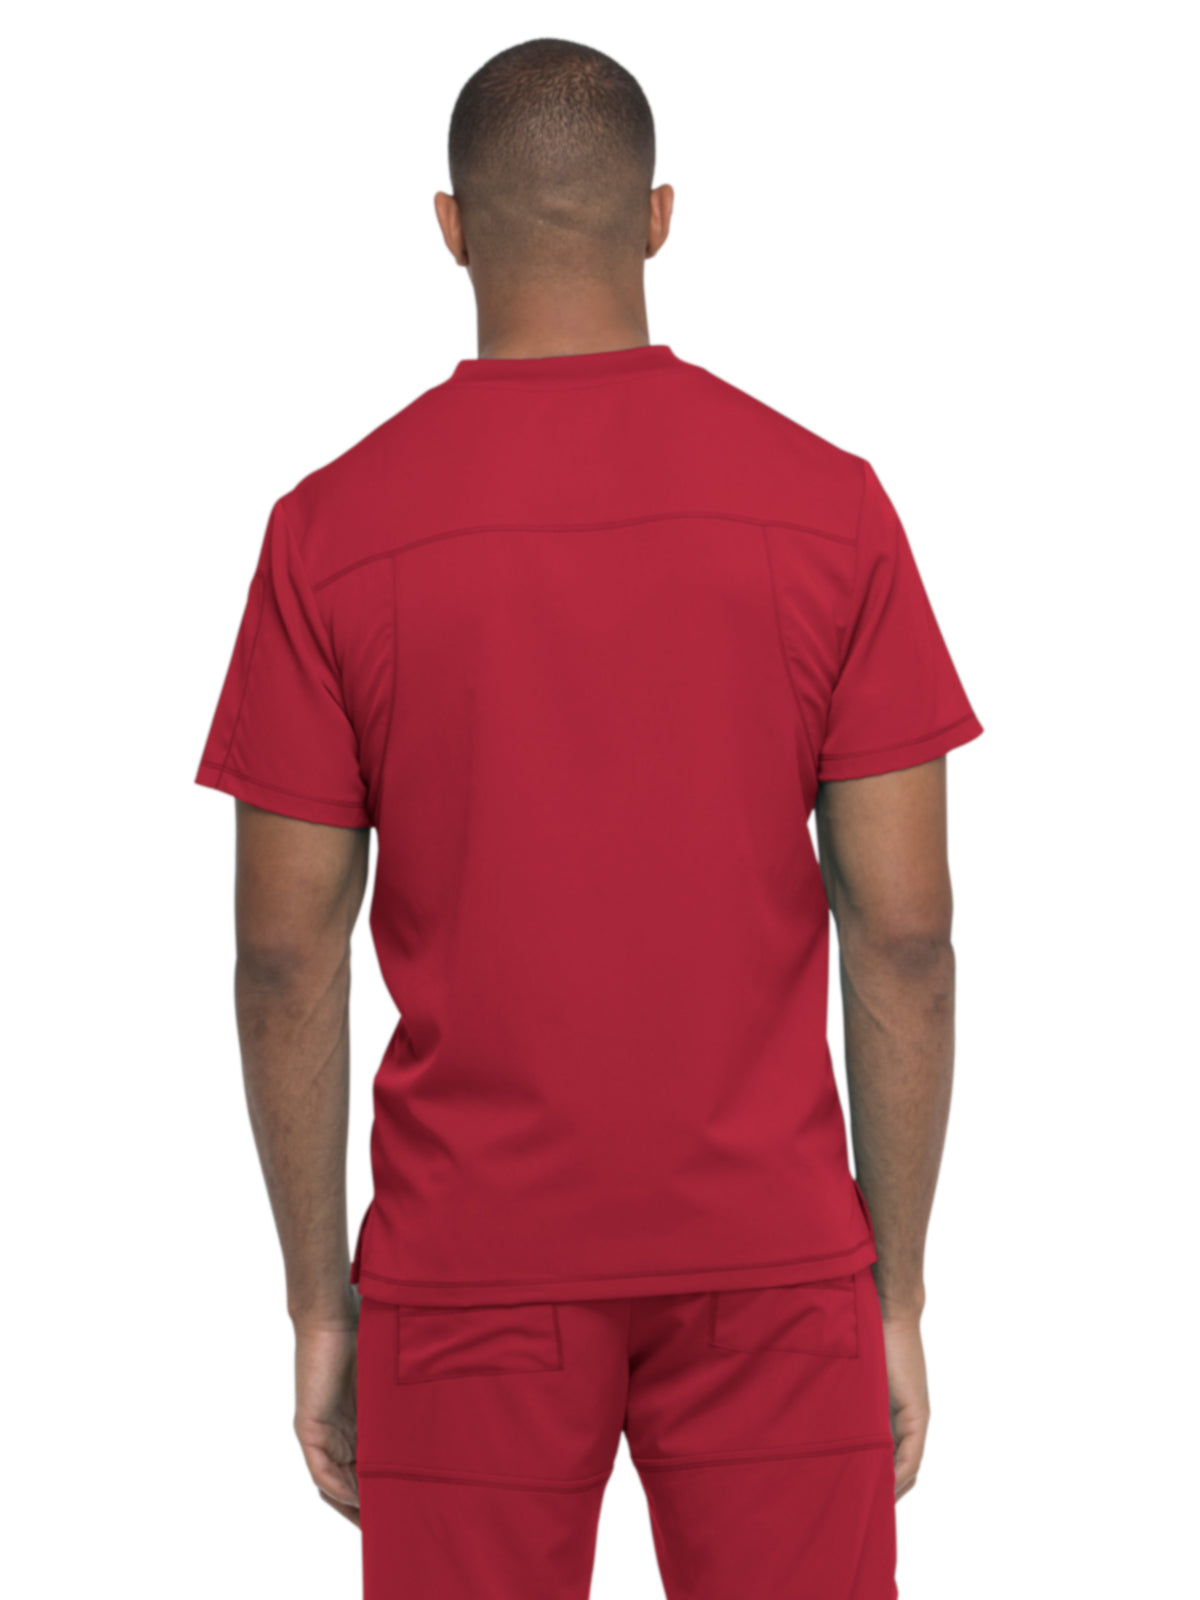 Men's 2-Pocket Tuckable Scrub Top - DK610 - Red